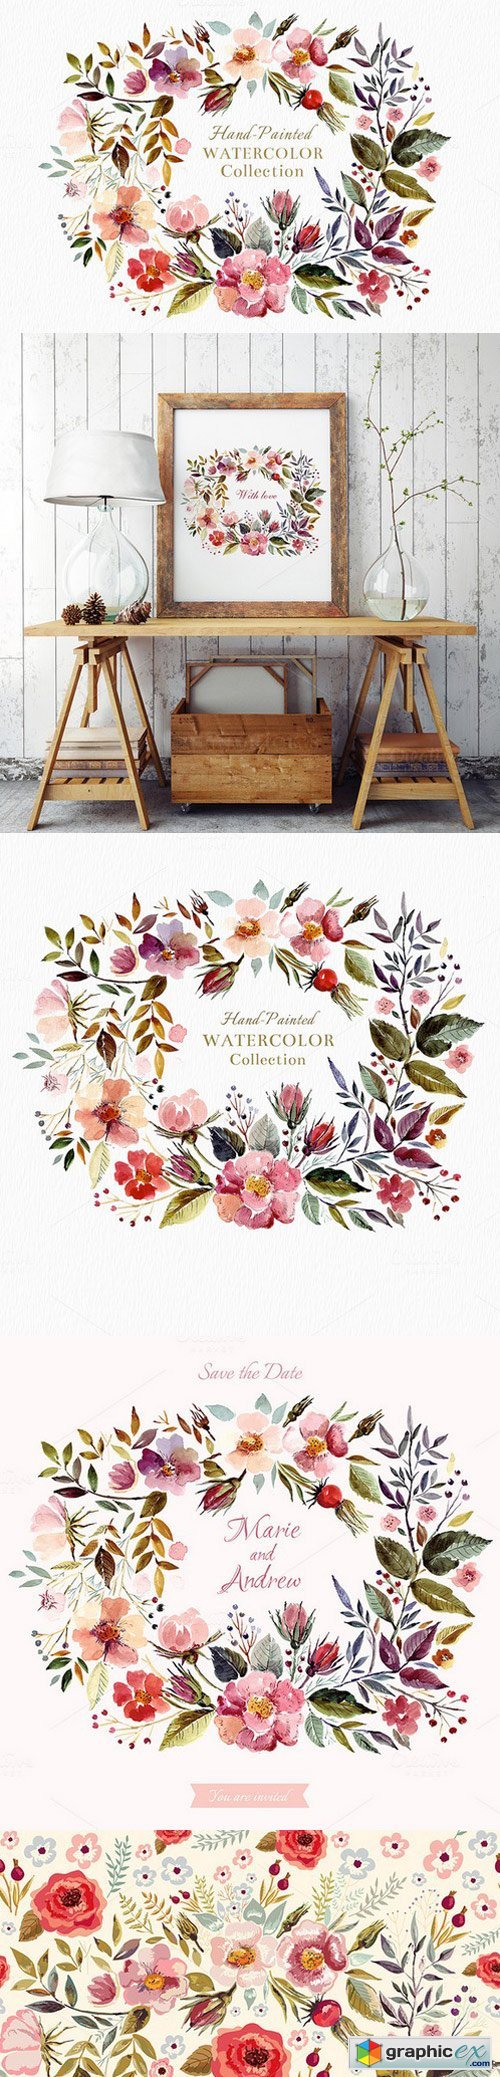 Big watercolor floral collection